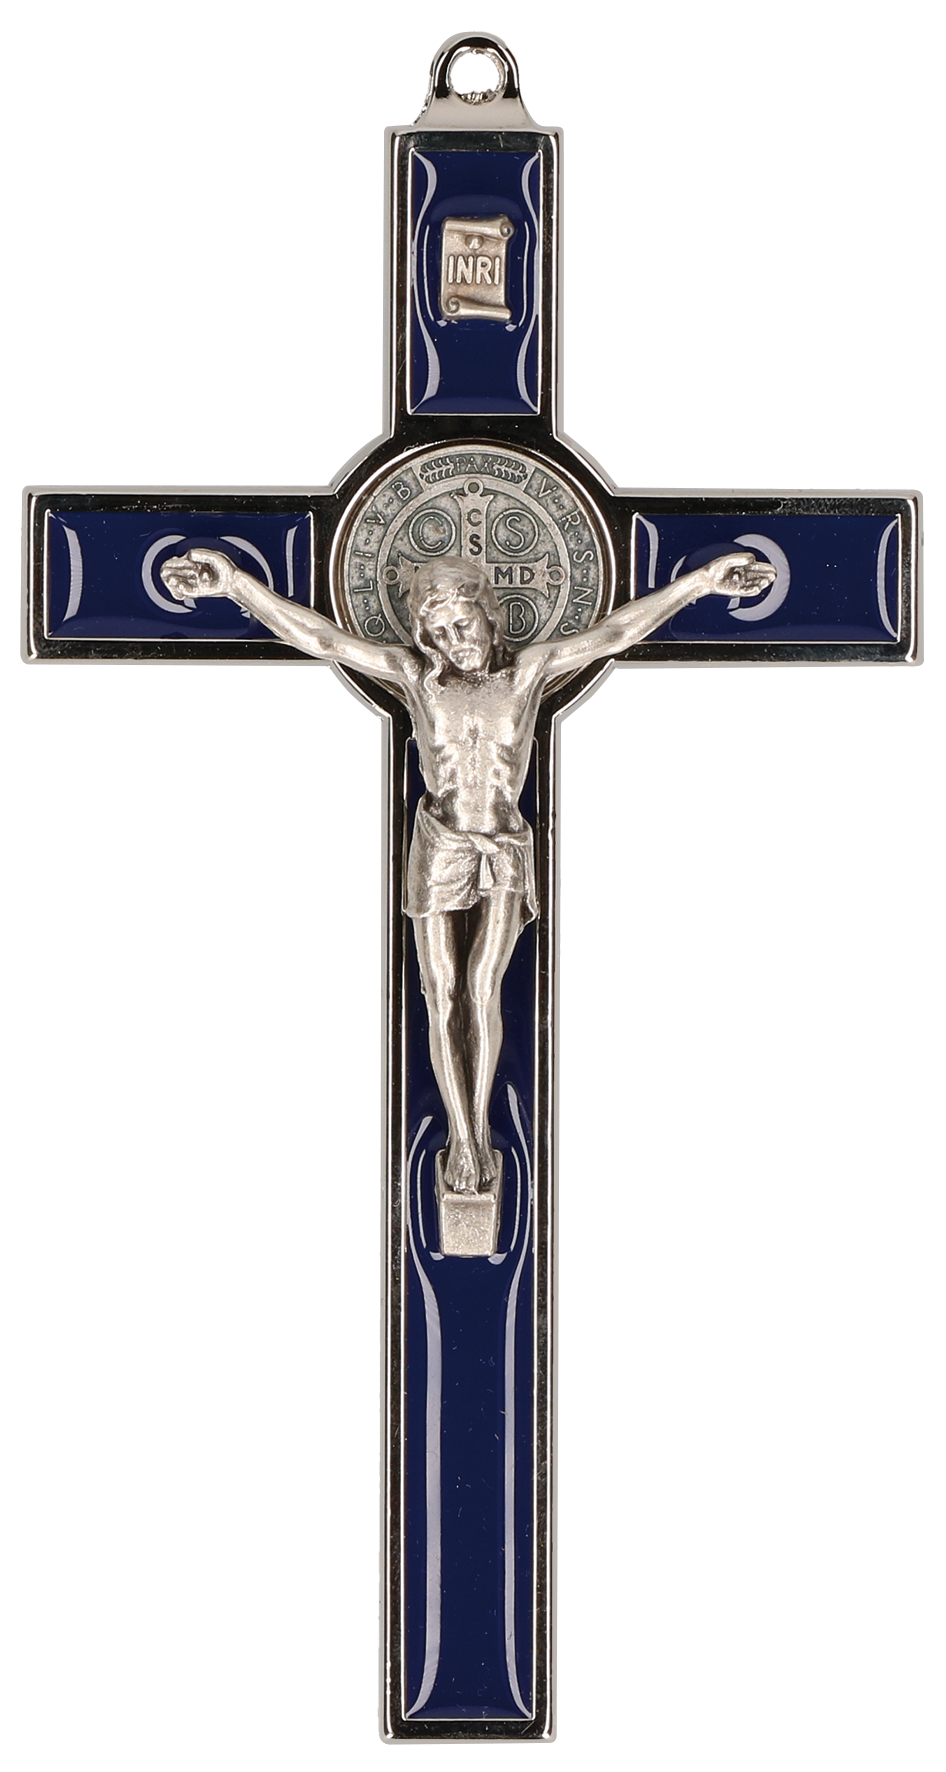 Benediktuskreuz aus Metall